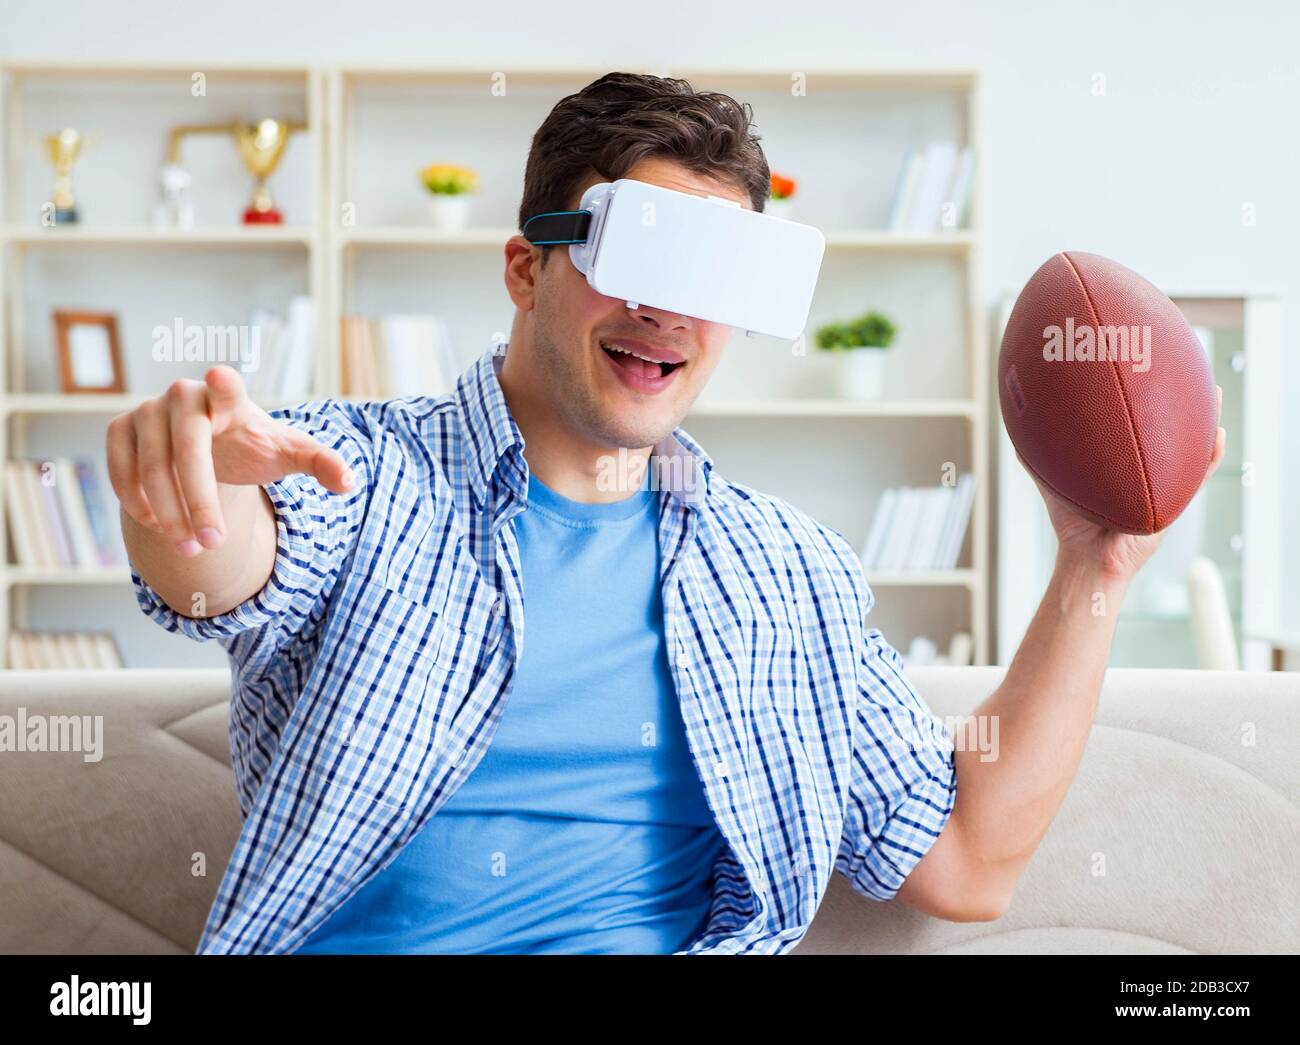 Mann mit Virtual Reality VR-Brille ansehen American Football  Stockfotografie - Alamy